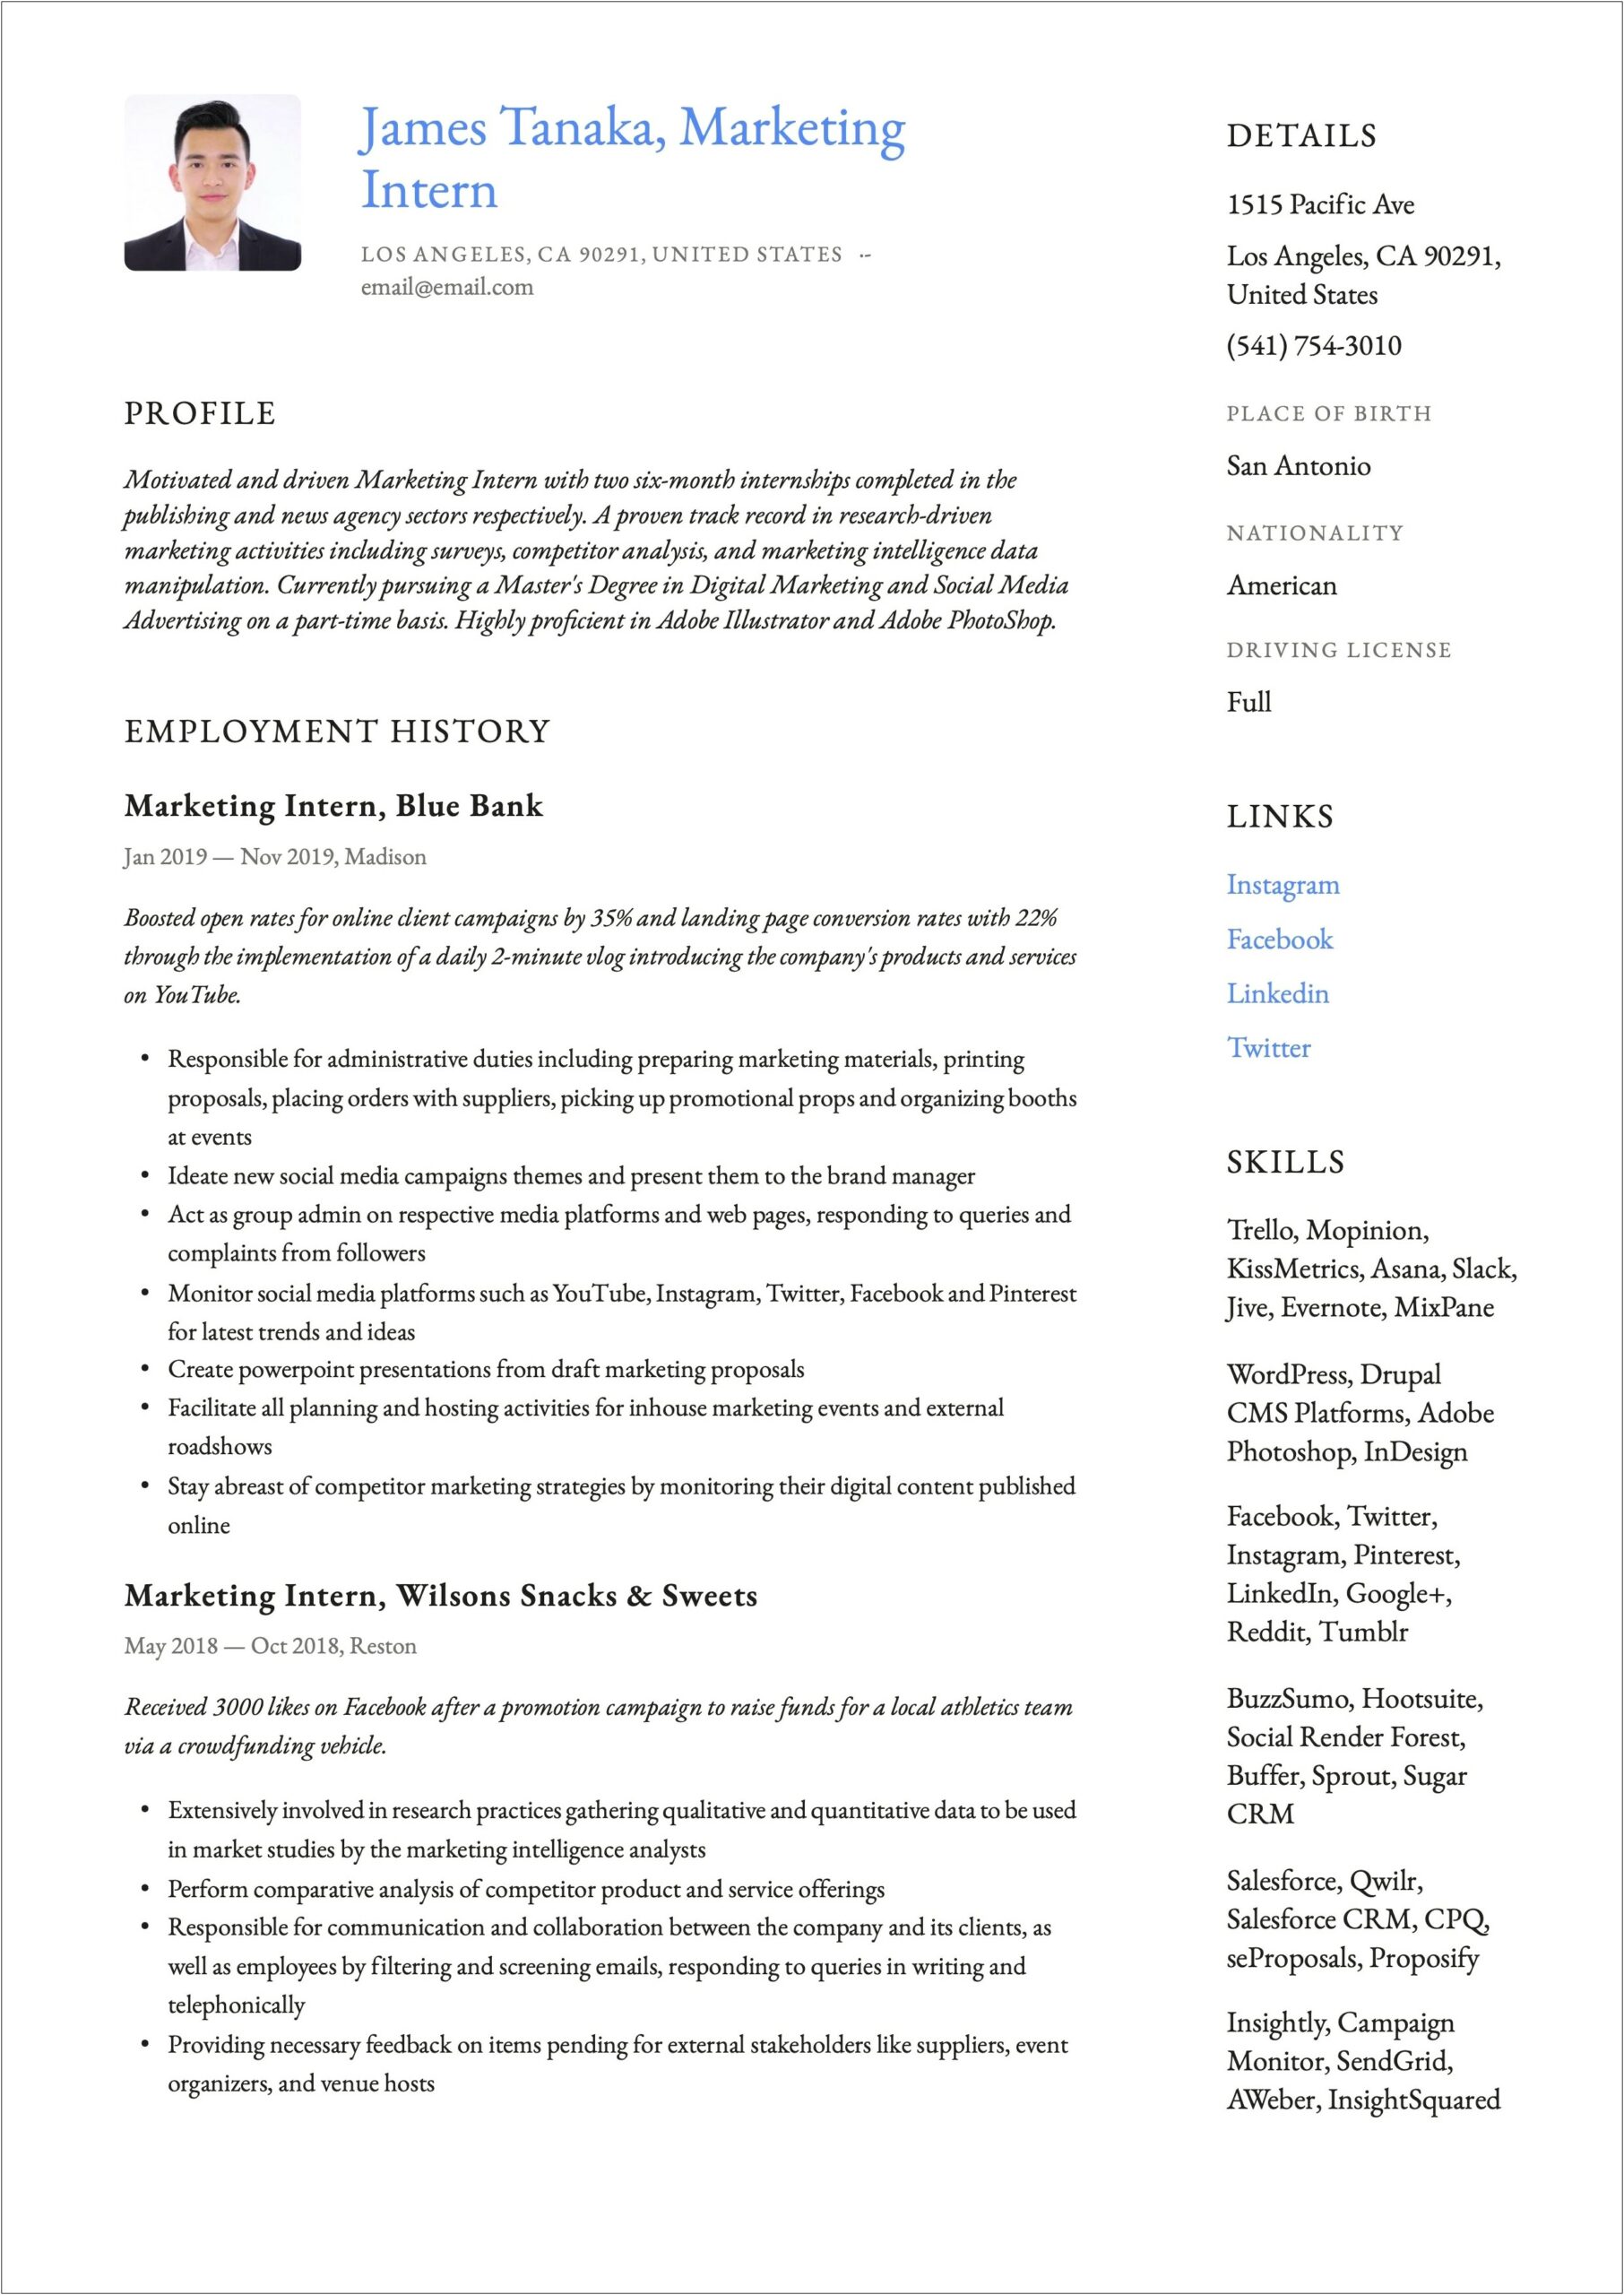 Jobs Descriptions For Marketing Intern For Resume